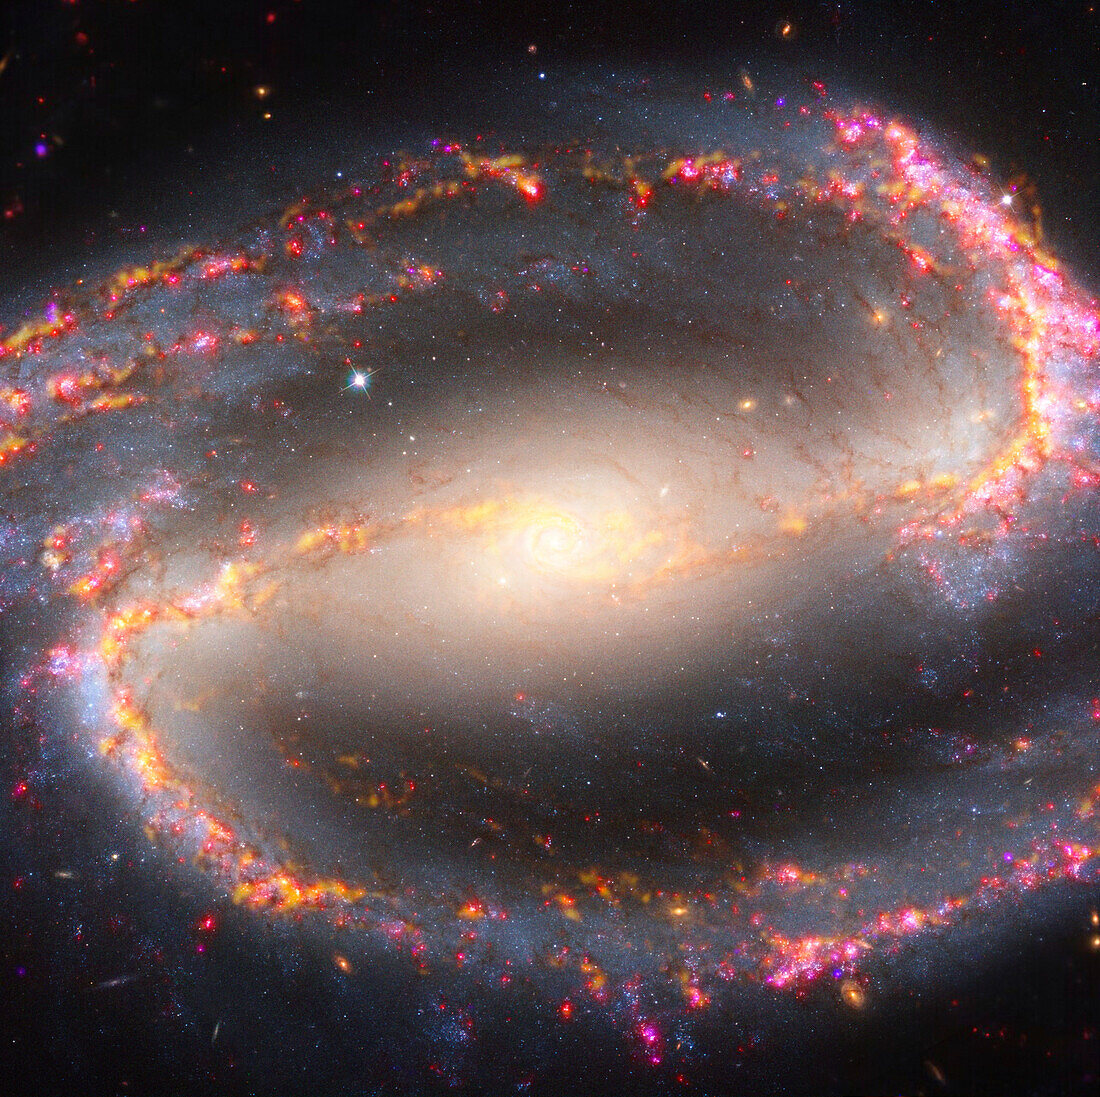 Galaxy NGC 1300, composite image